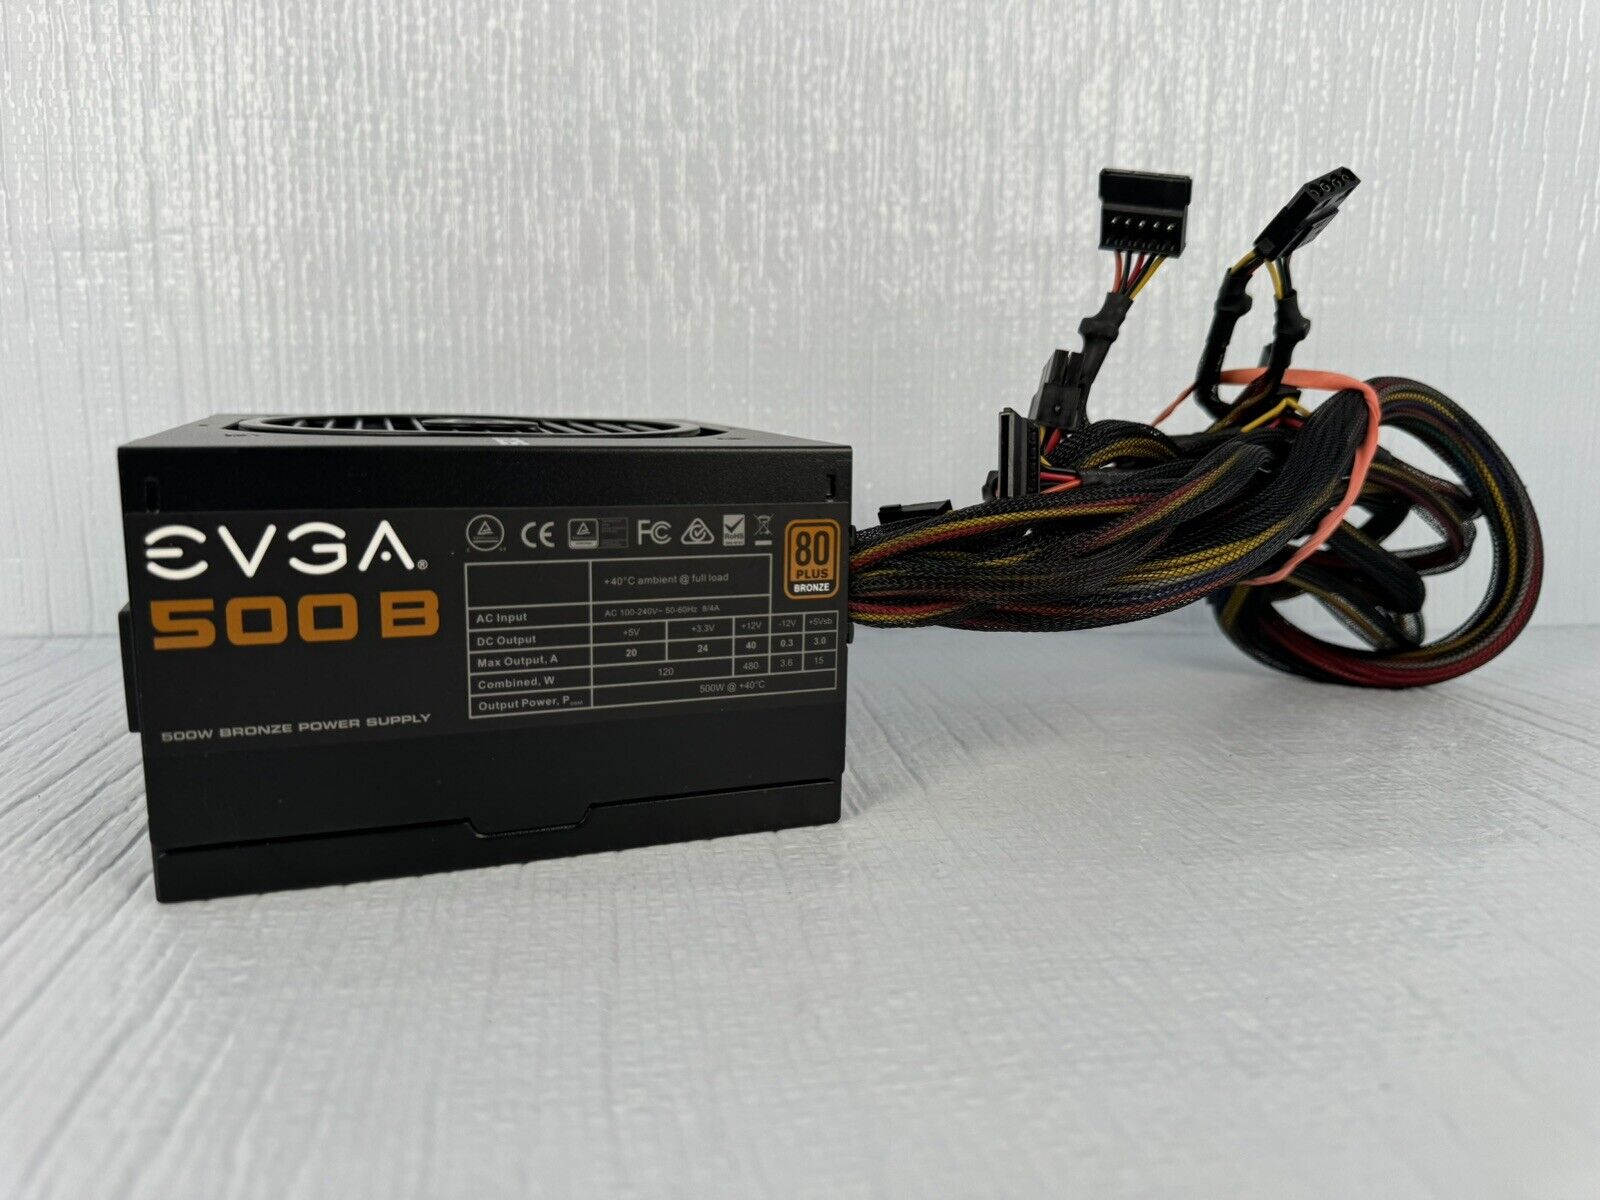 EVGA 500 B 100-B1-0500 80 PLUS BRONZE POWER SUPPLY 500W Tested